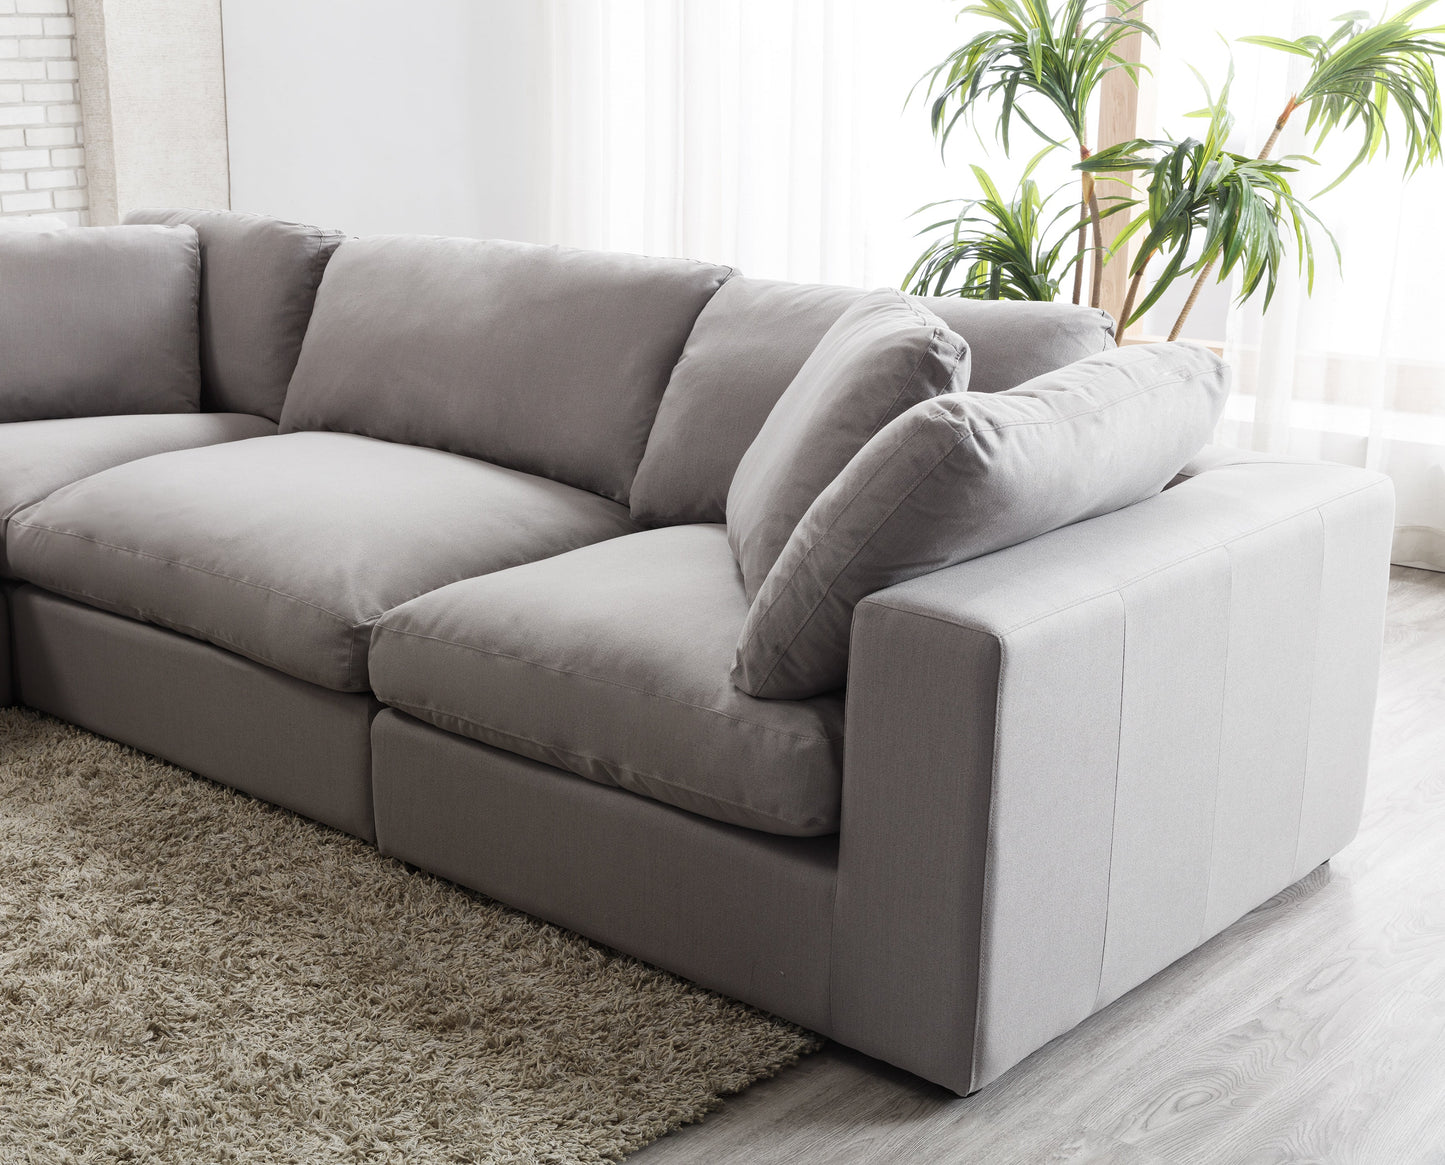 Rivas Contemporary Feather Fill 5-Piece Modular Sectional Sofa with Ottoman, Graphite